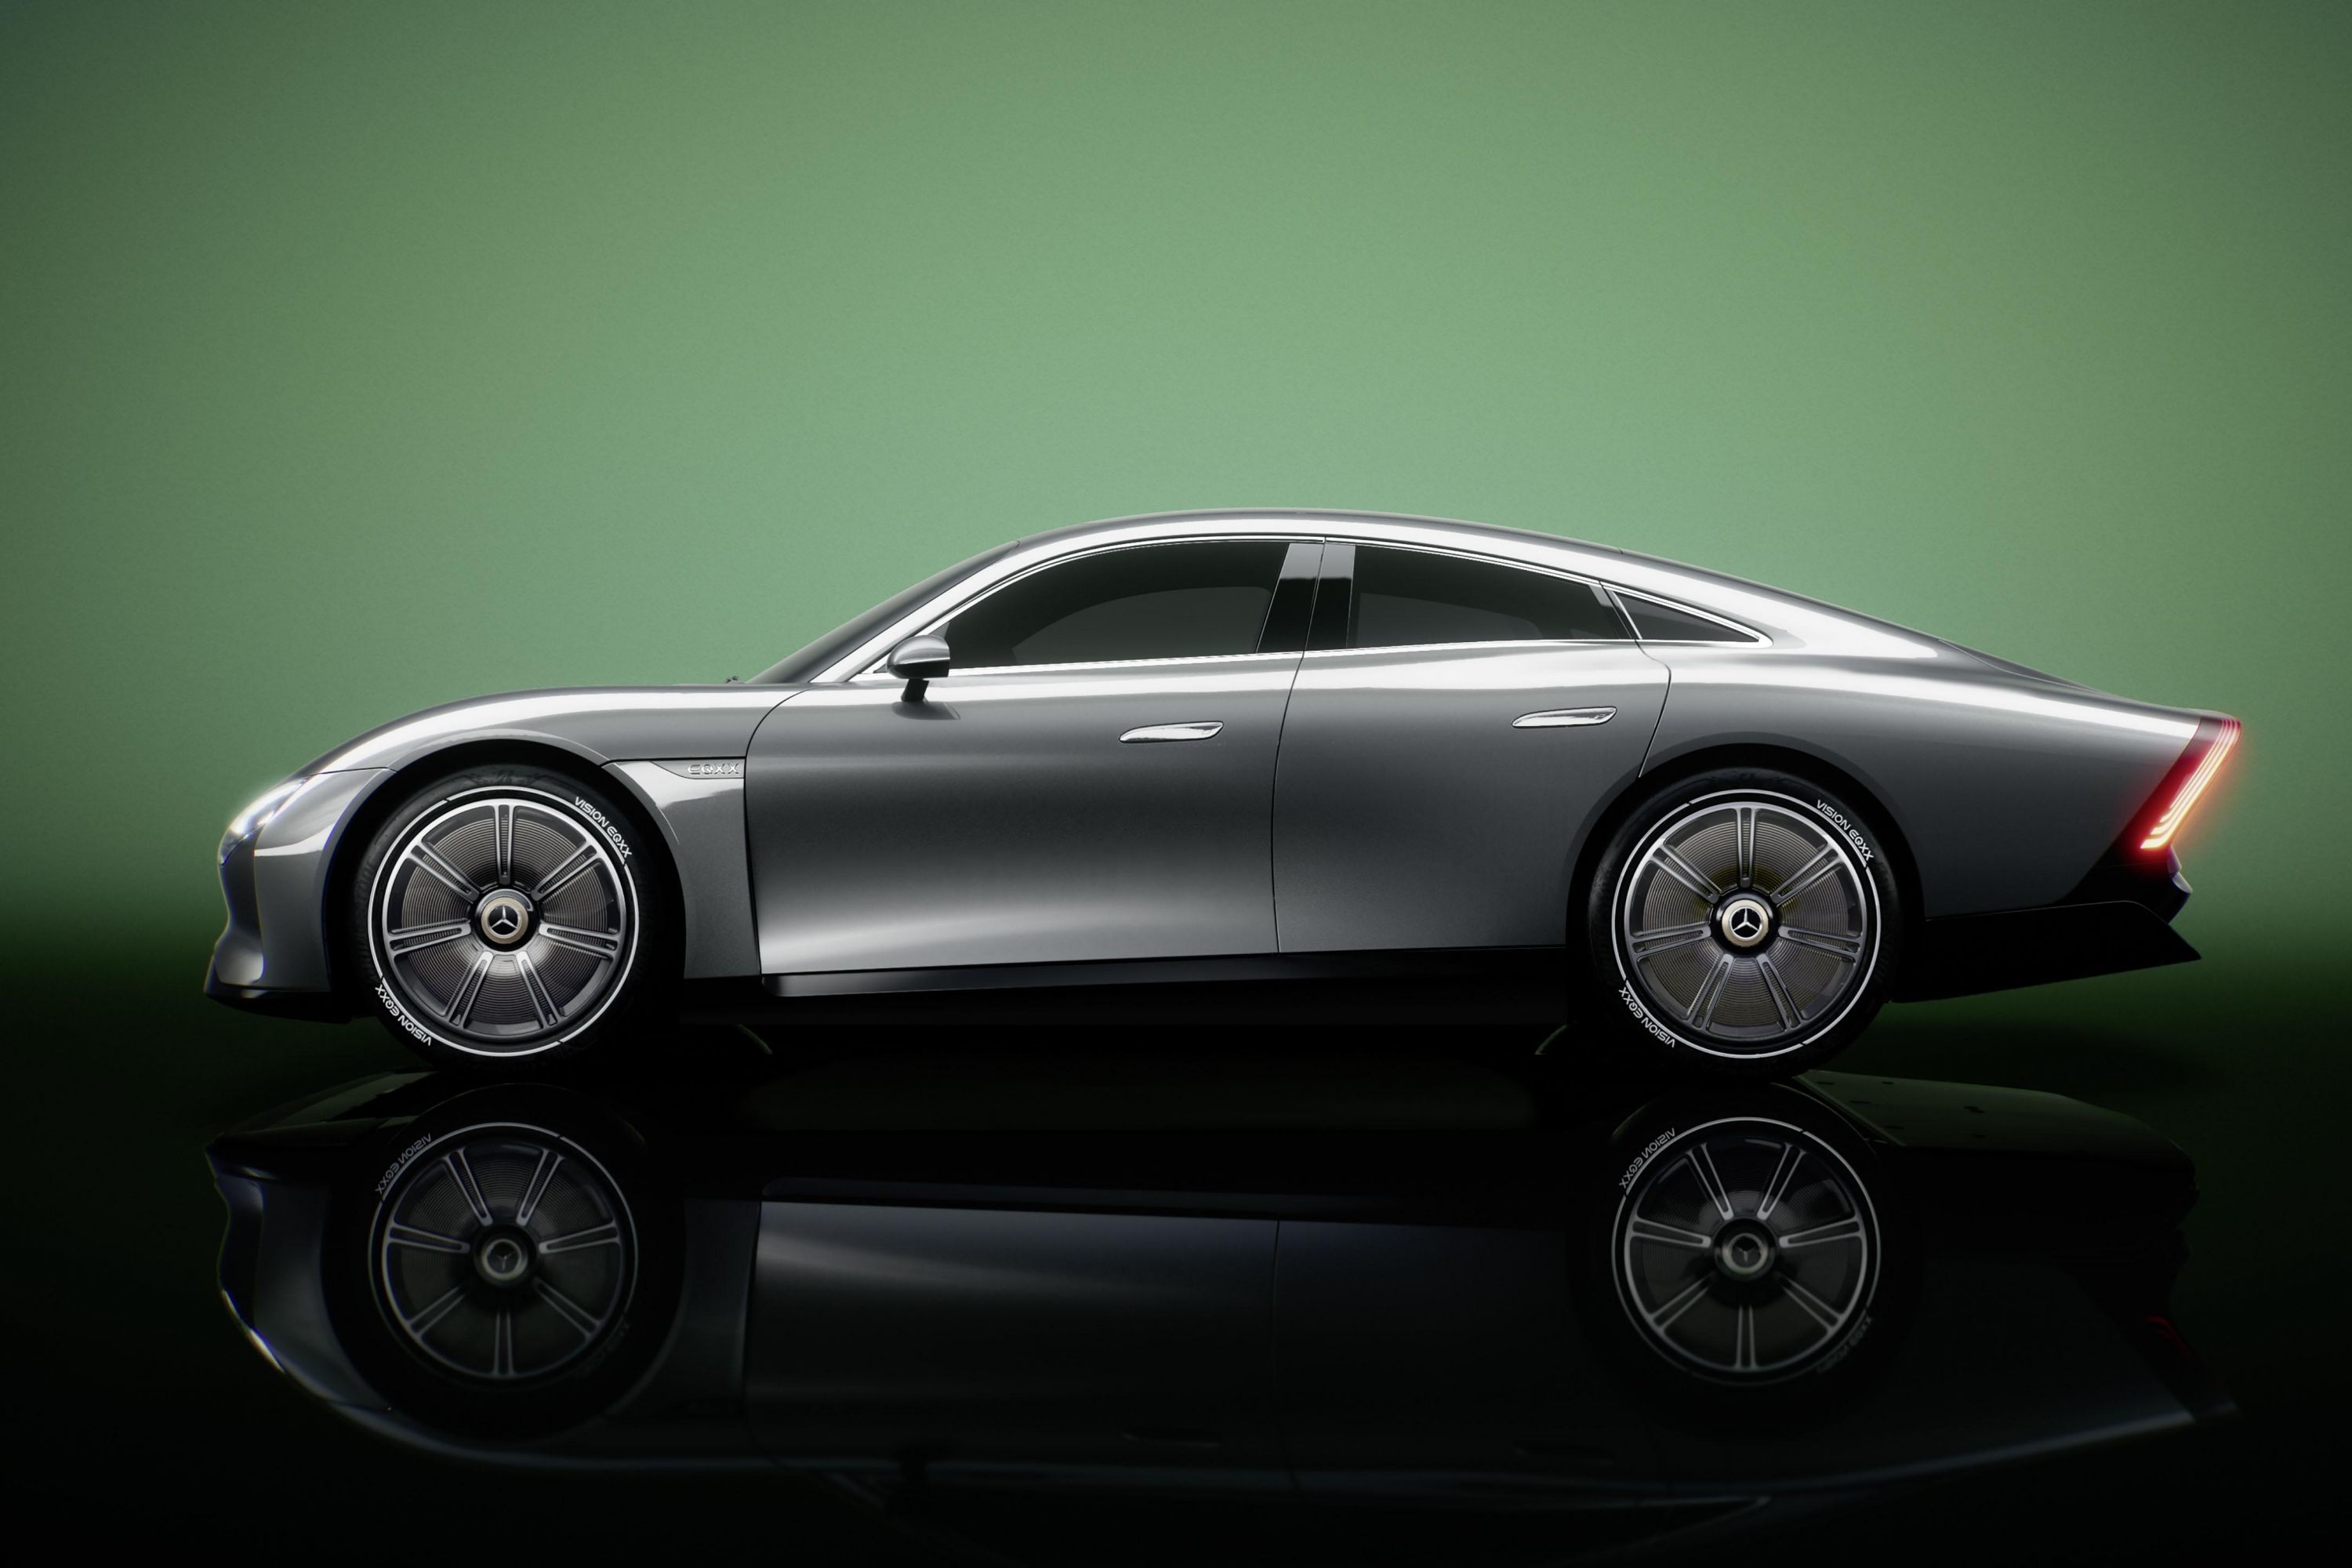 Mercedes-Benz yeni elektrikli modelini tanıttı: Tek şarjla 1000 kilometre menzil